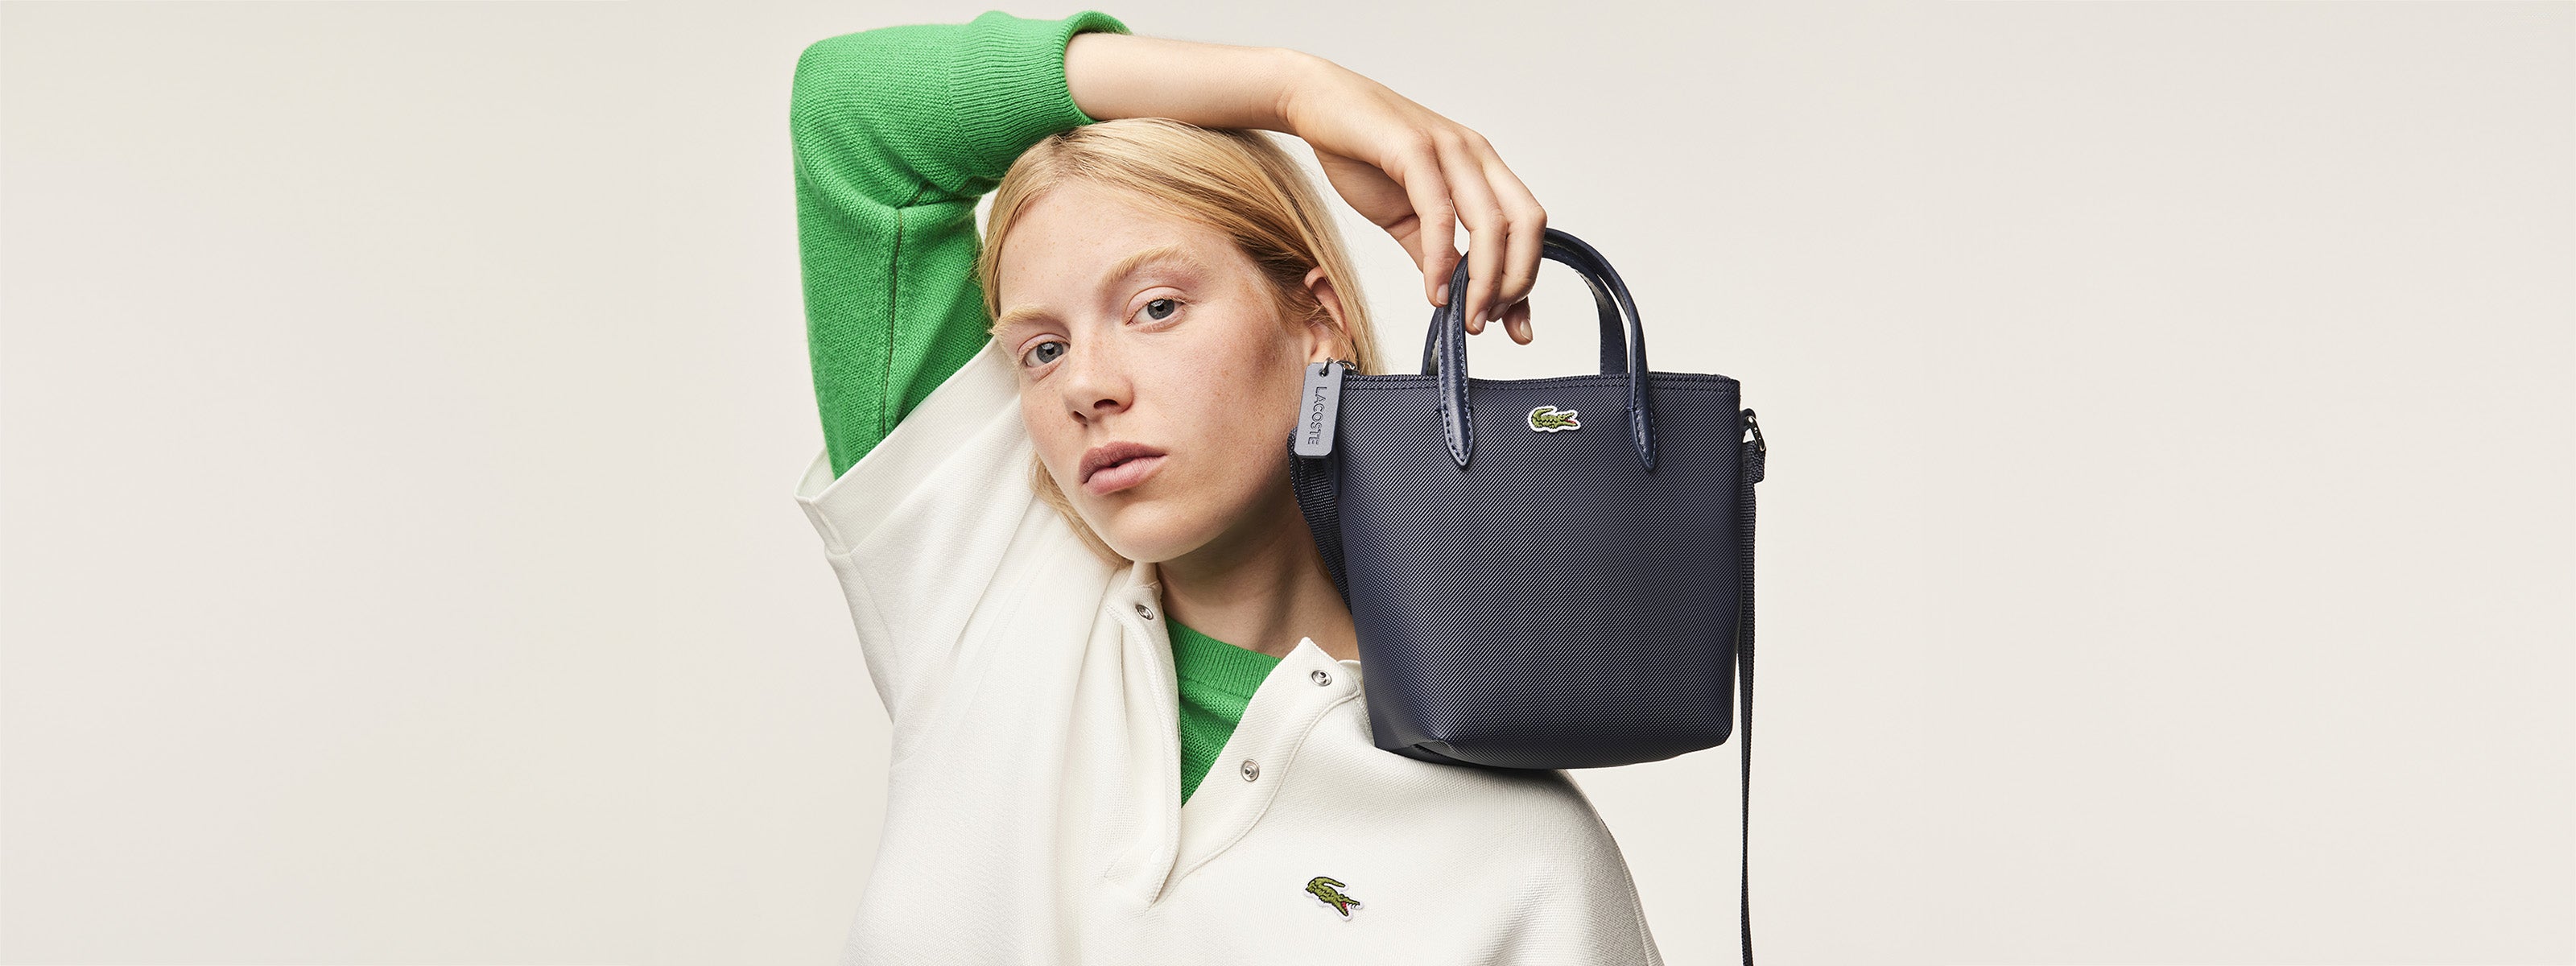 Lacoste Anna Large Reversible Shopping Bag (Black Warm Sand) Handbags